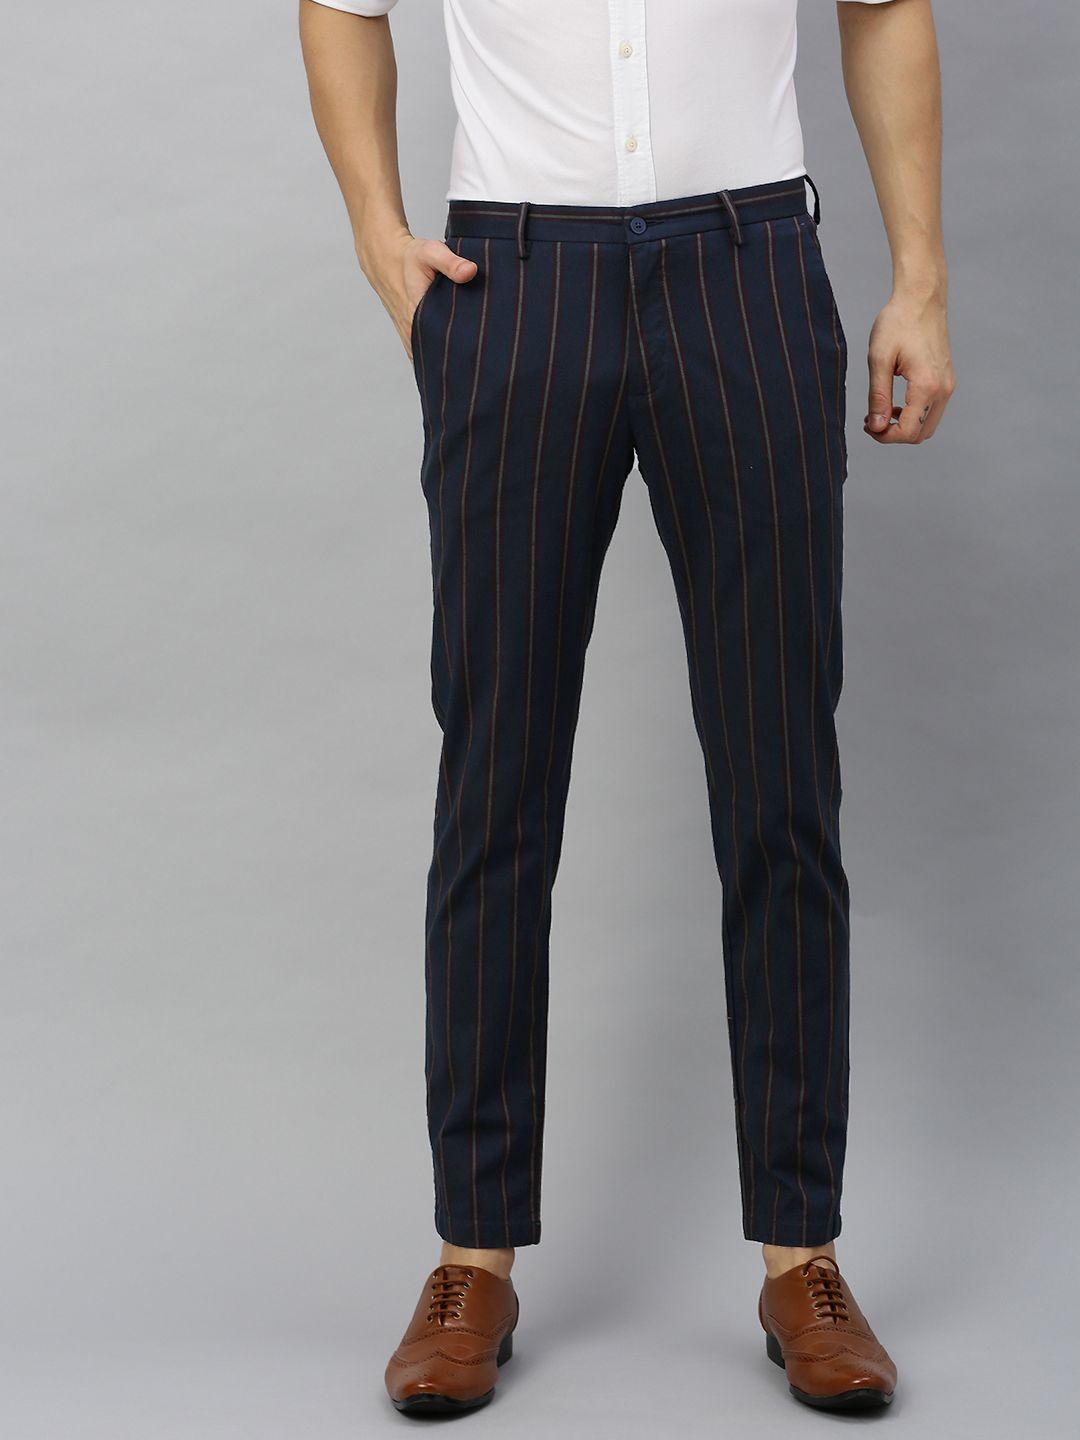 blackberrys men navy blue & brown lean skinny fit striped regular trousers